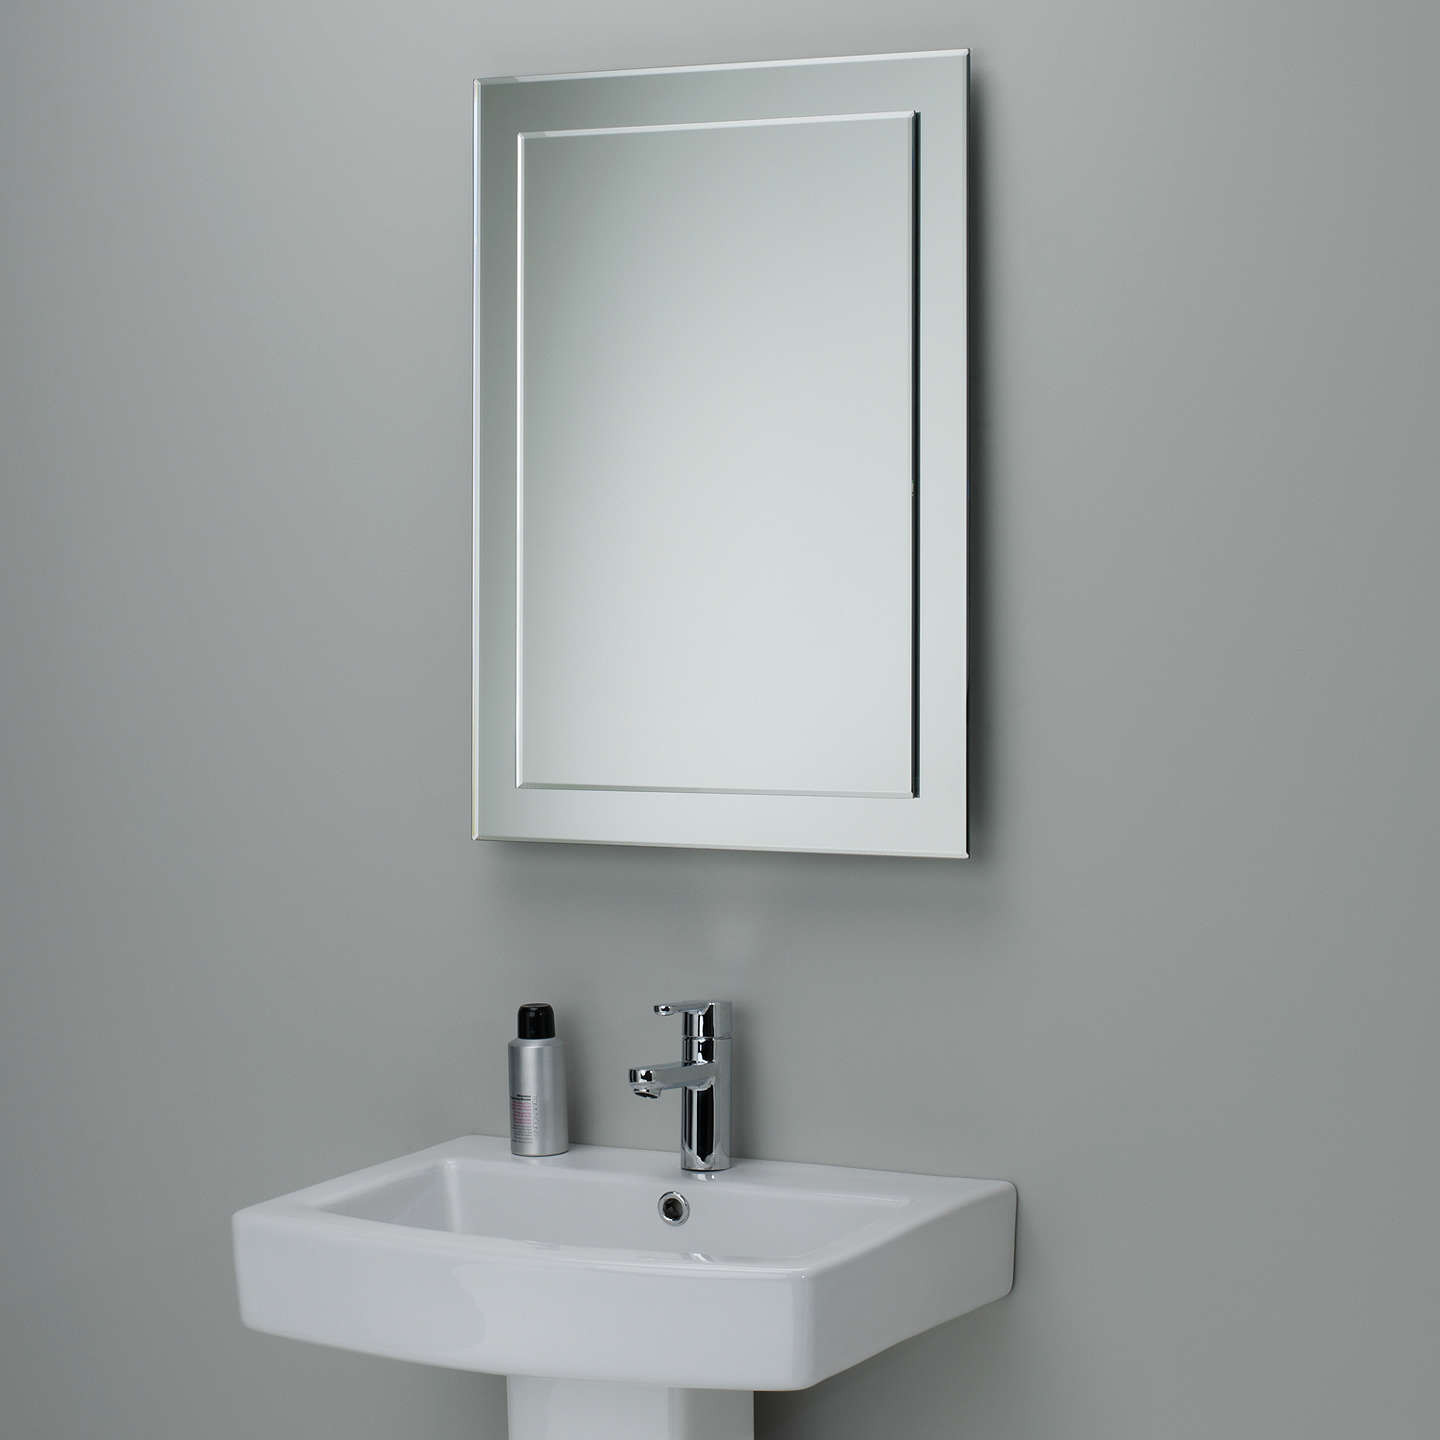 Wall Mirror For Bathroom
 John Lewis Duo Wall Bathroom Mirror 70 x 50cm at John Lewis